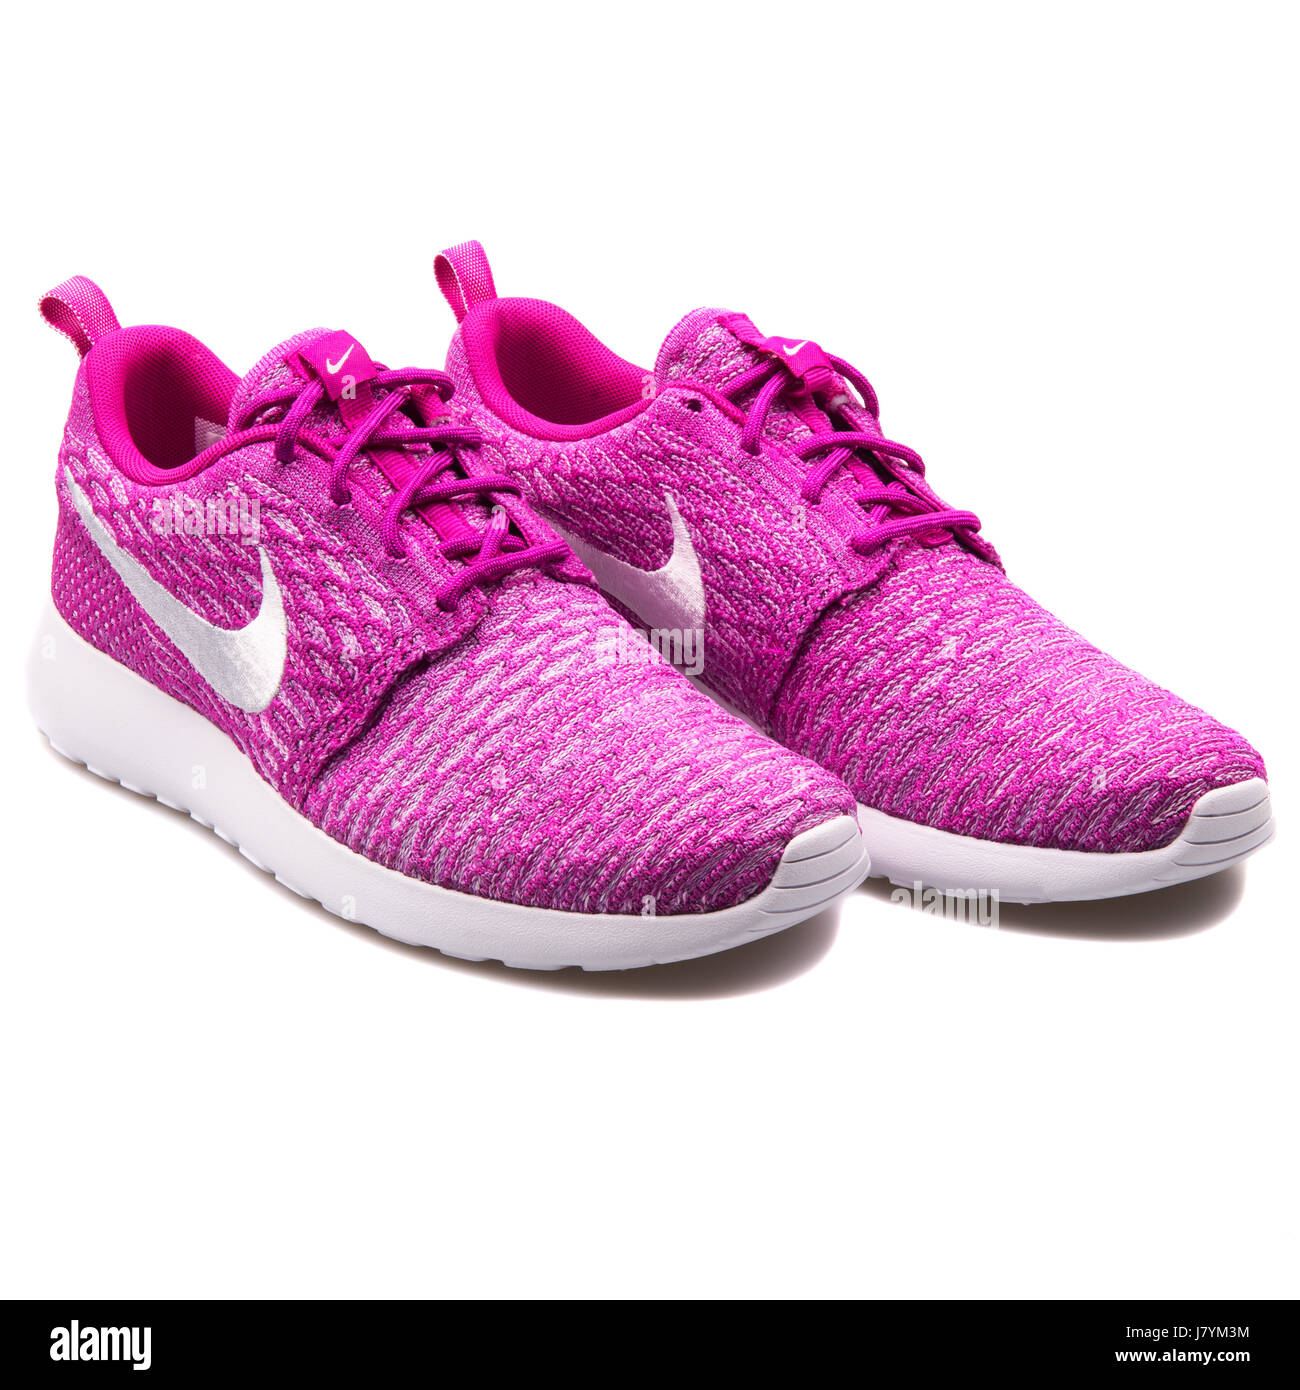 WMNS Nike Flyknit Rosherun Fucsia ejecutando Sneakers - de stock - Alamy